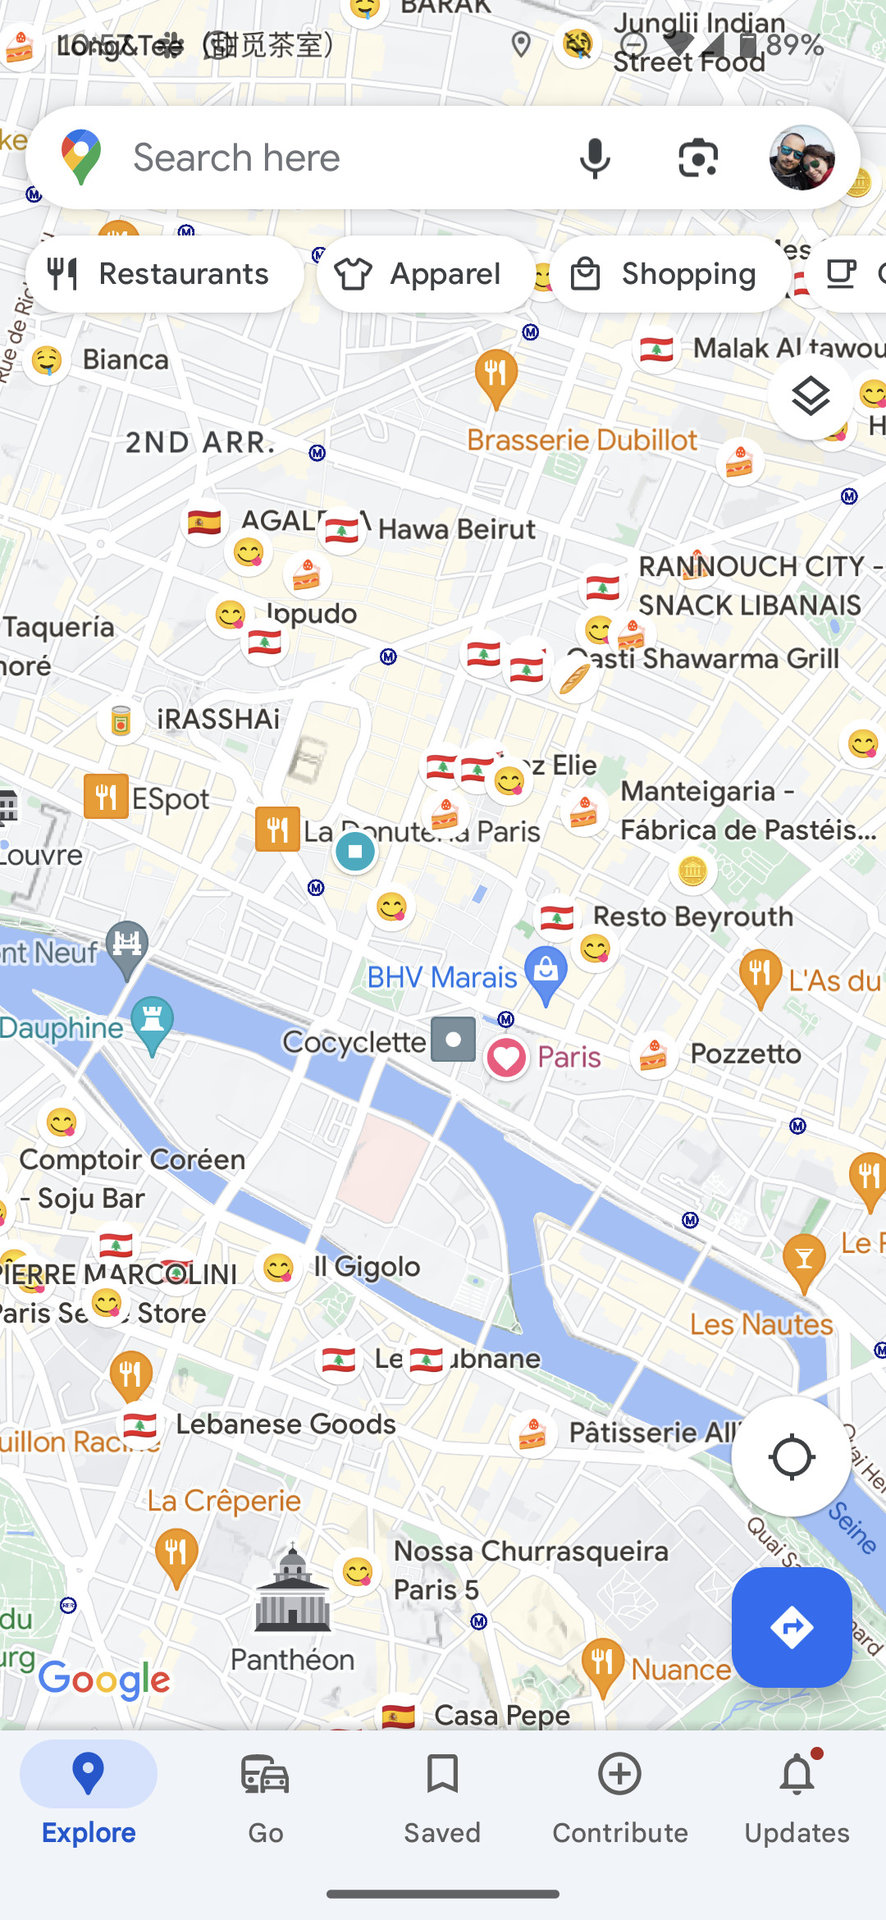 google maps lists emoji icons